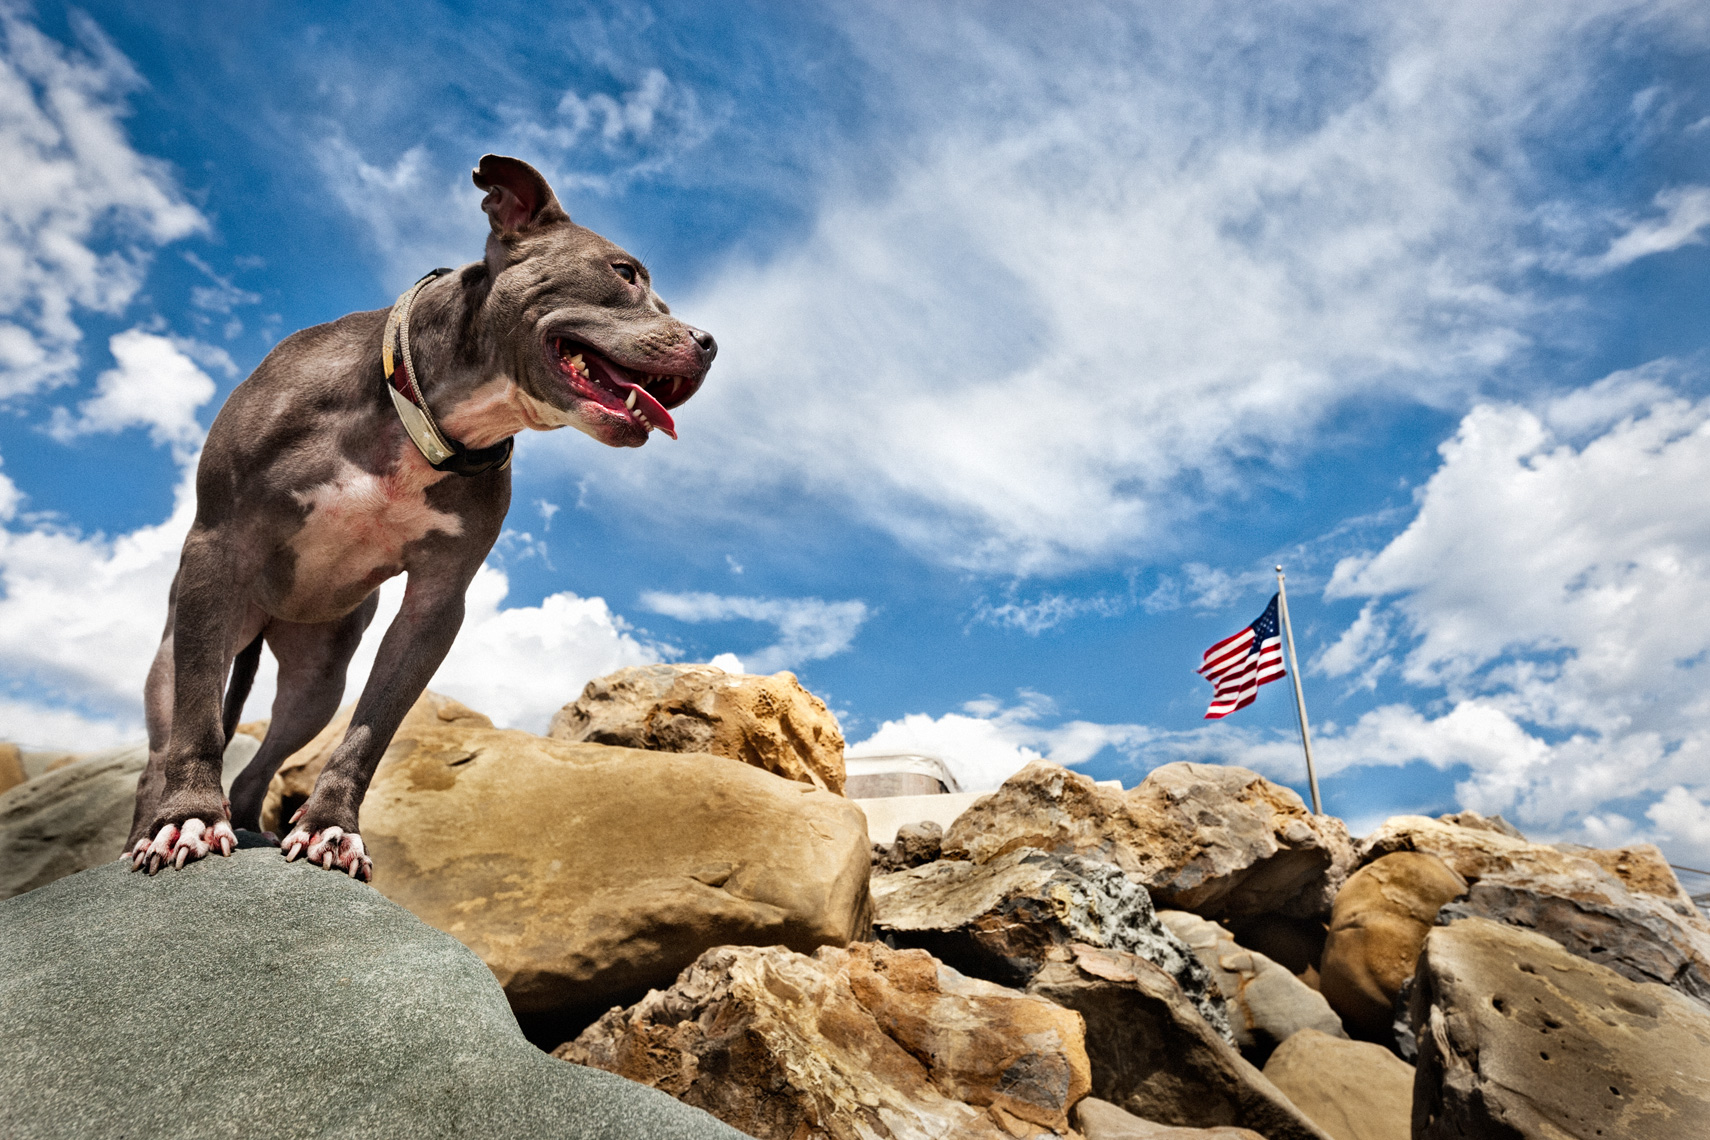 Los Angeles Dog Photography, Michael Brian, Blue Pitbull Kasha Fierce on rock at Padero Beach, California with American flag